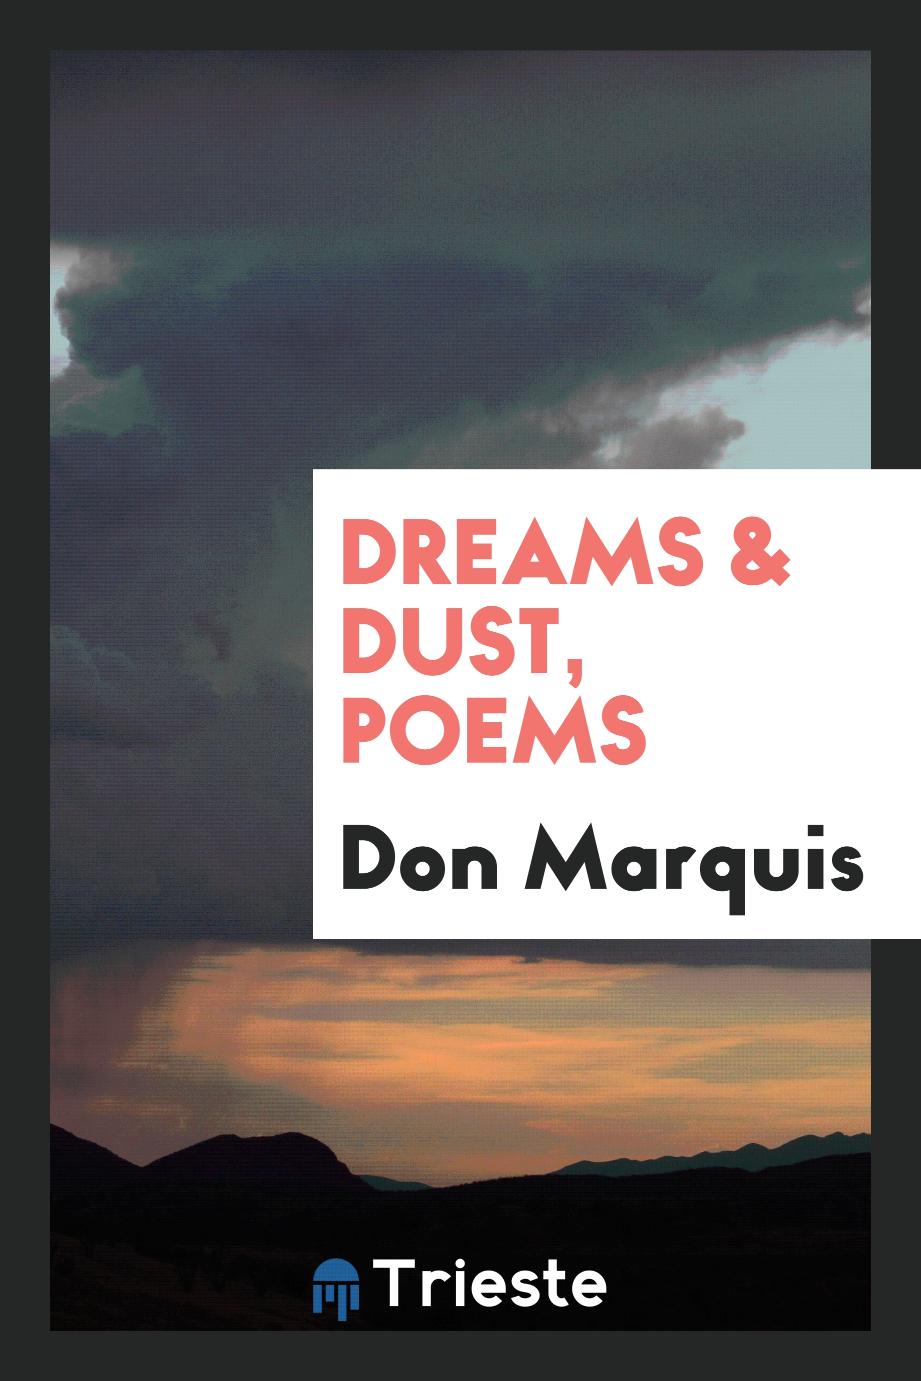 Dreams & dust, poems